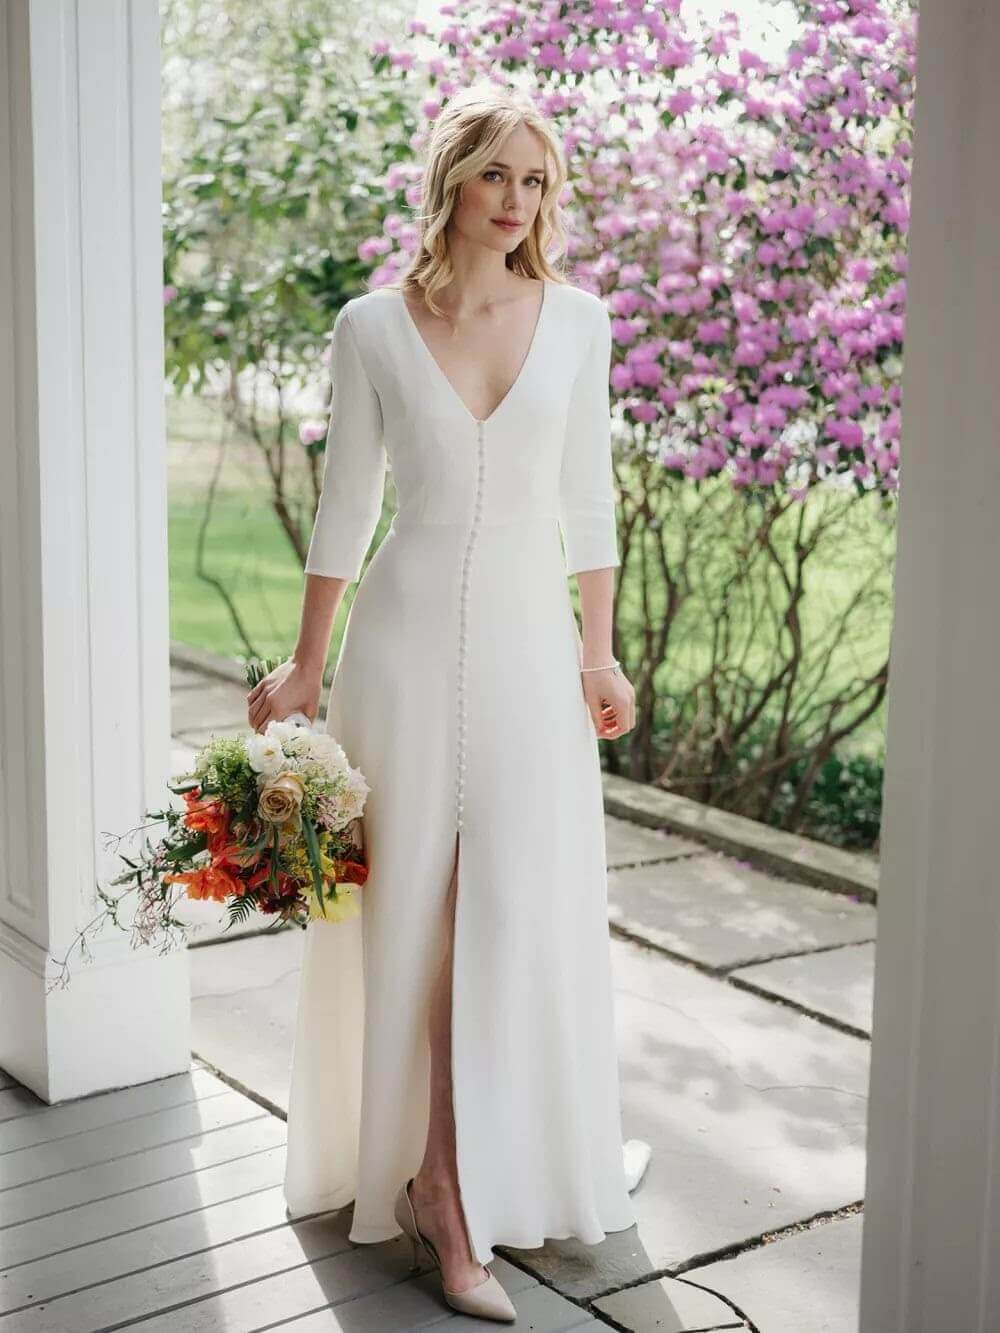 A simple and elegant dress of Elizabeth by designer Andrea Hawkes - Facebook